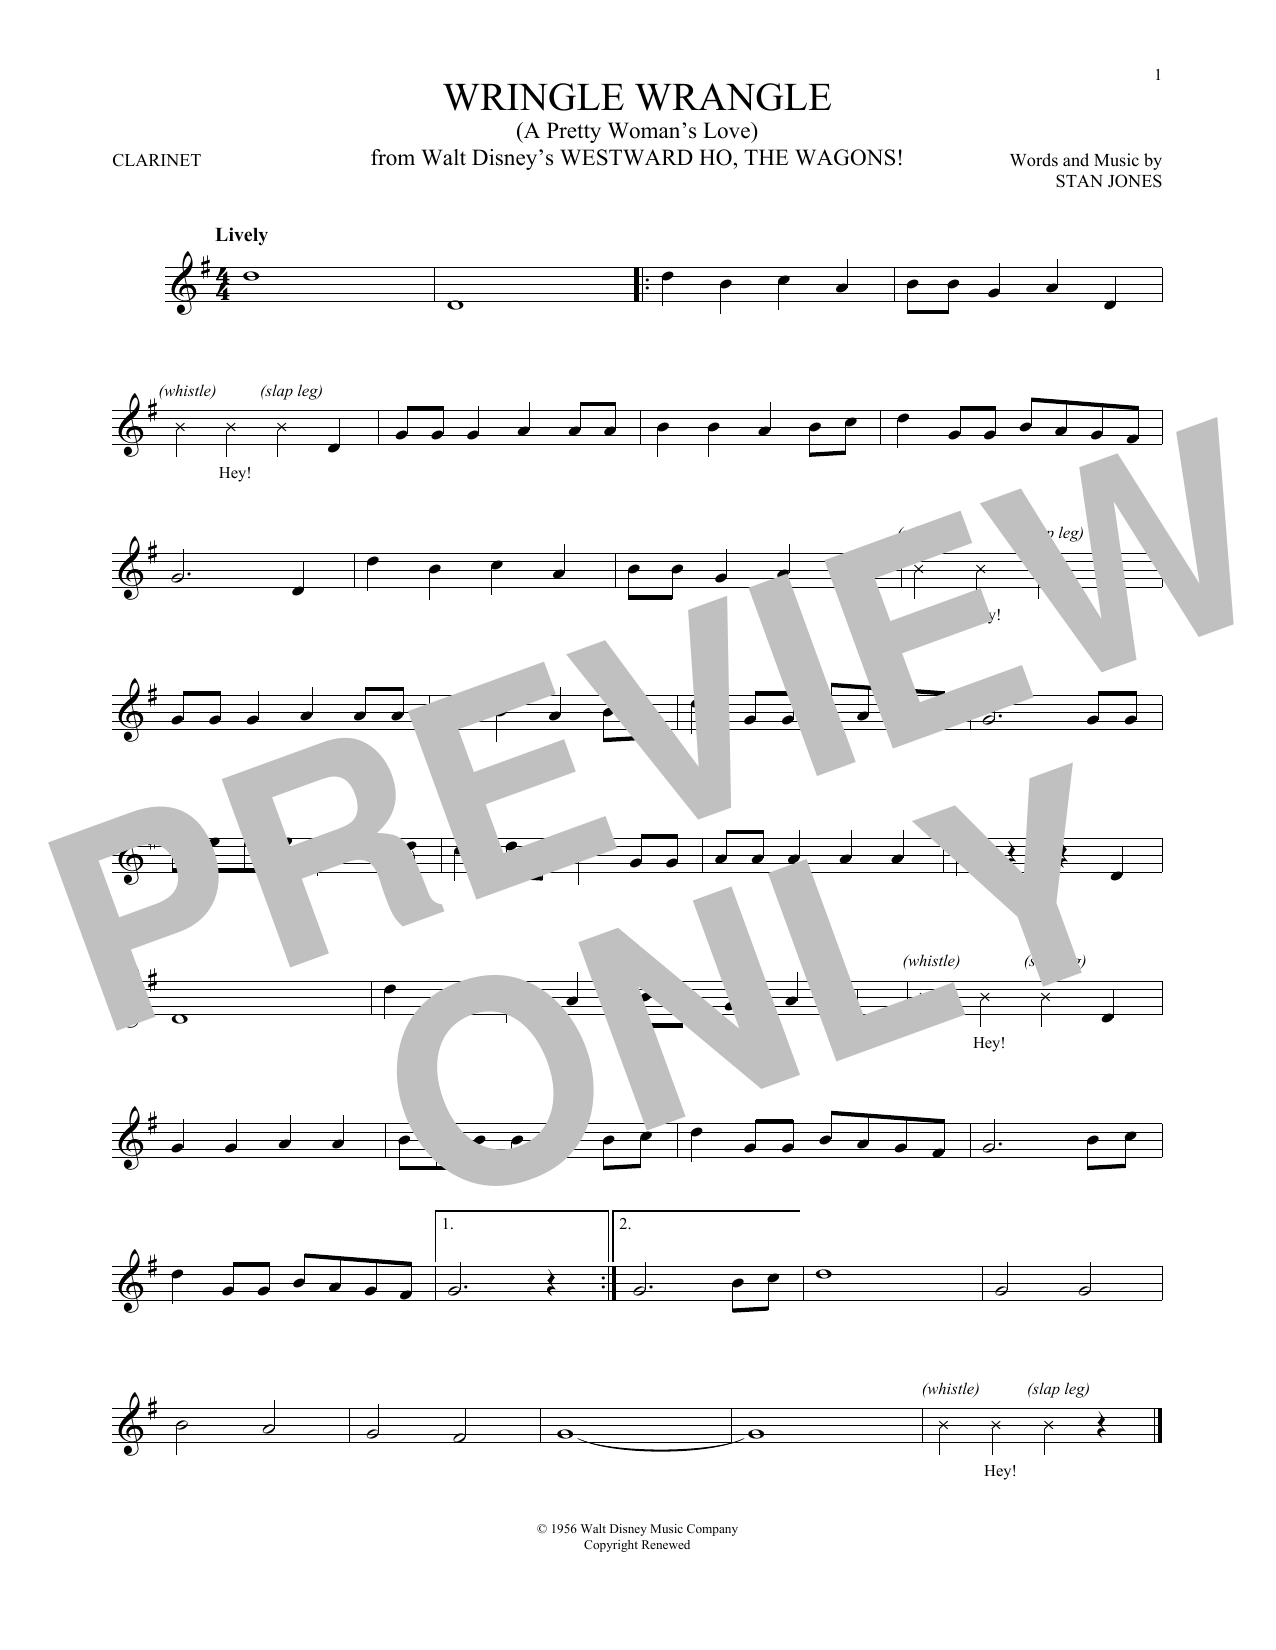 Stan Jones Wringle Wrangle (A Pretty Woman's Love) Sheet Music Notes & Chords for Alto Saxophone - Download or Print PDF